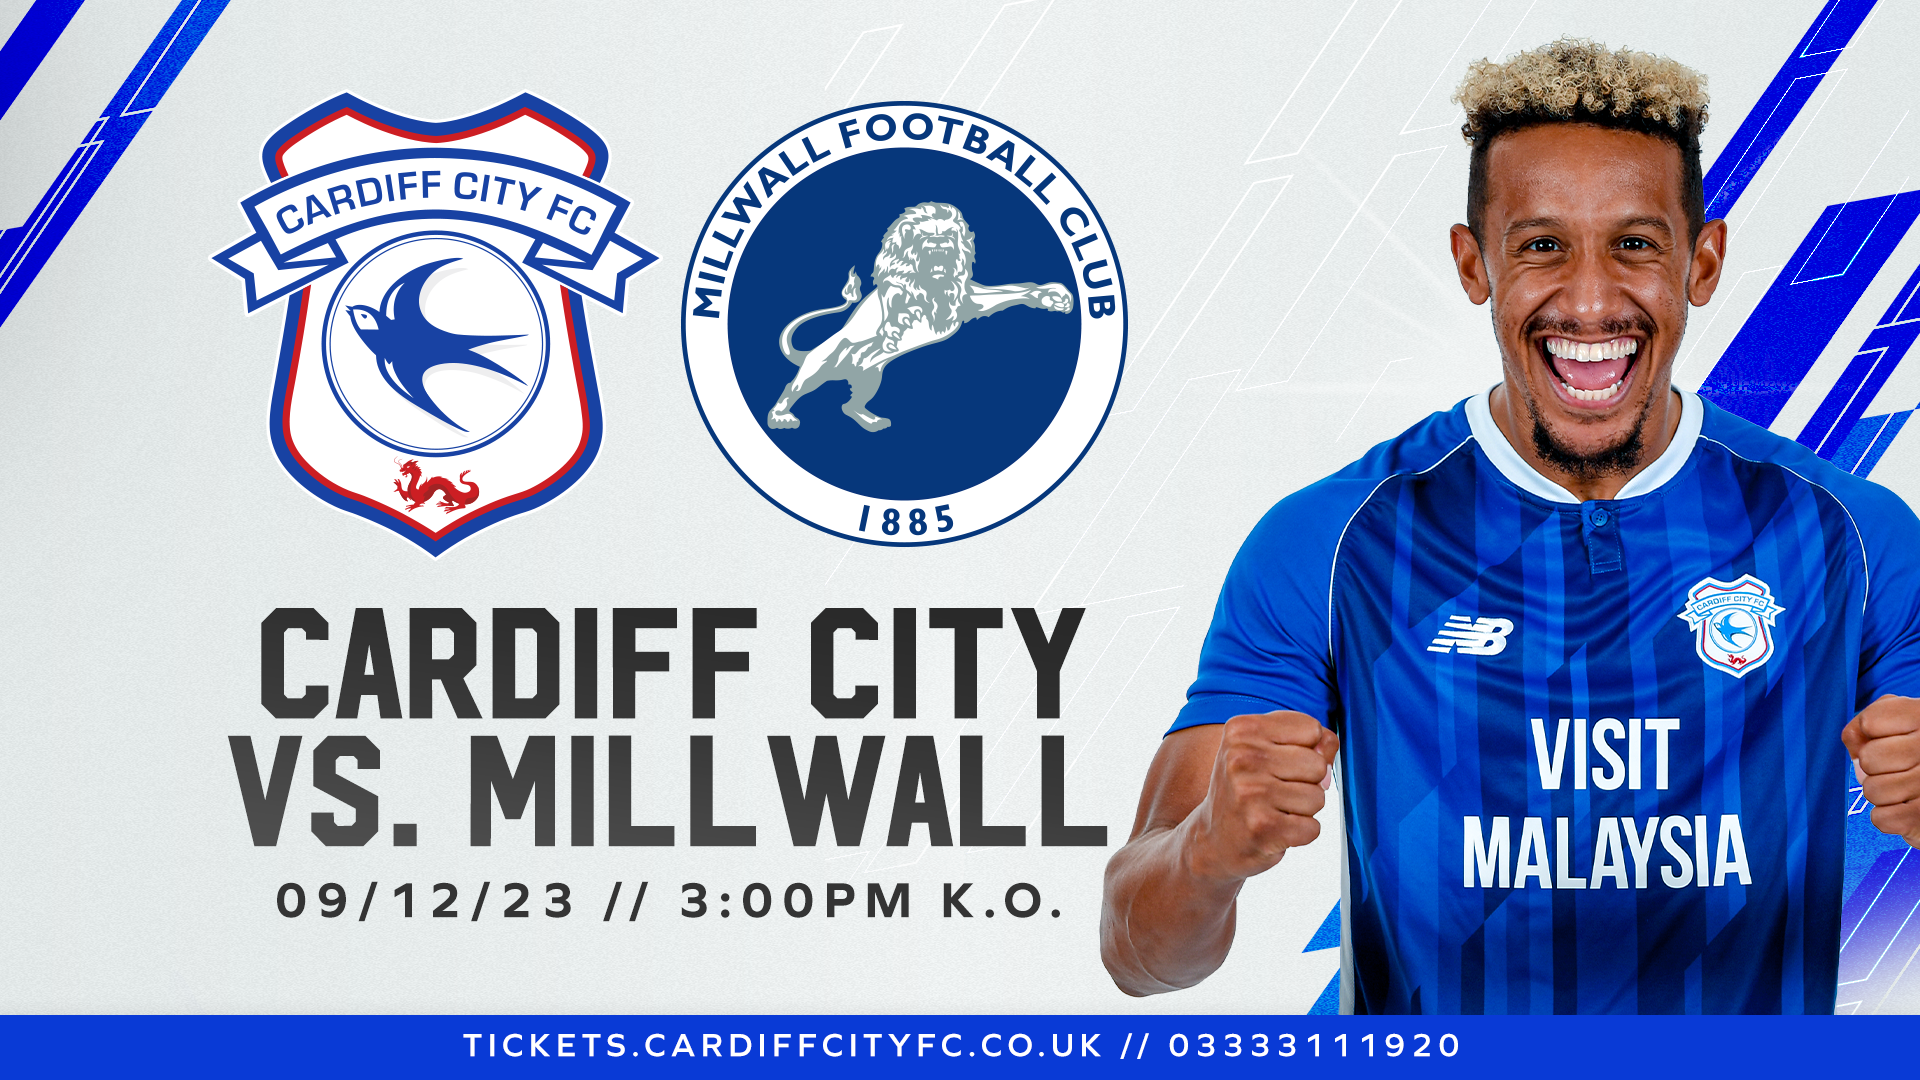 Cardiff City FC • EFL Championship football team • Visit Cardiff